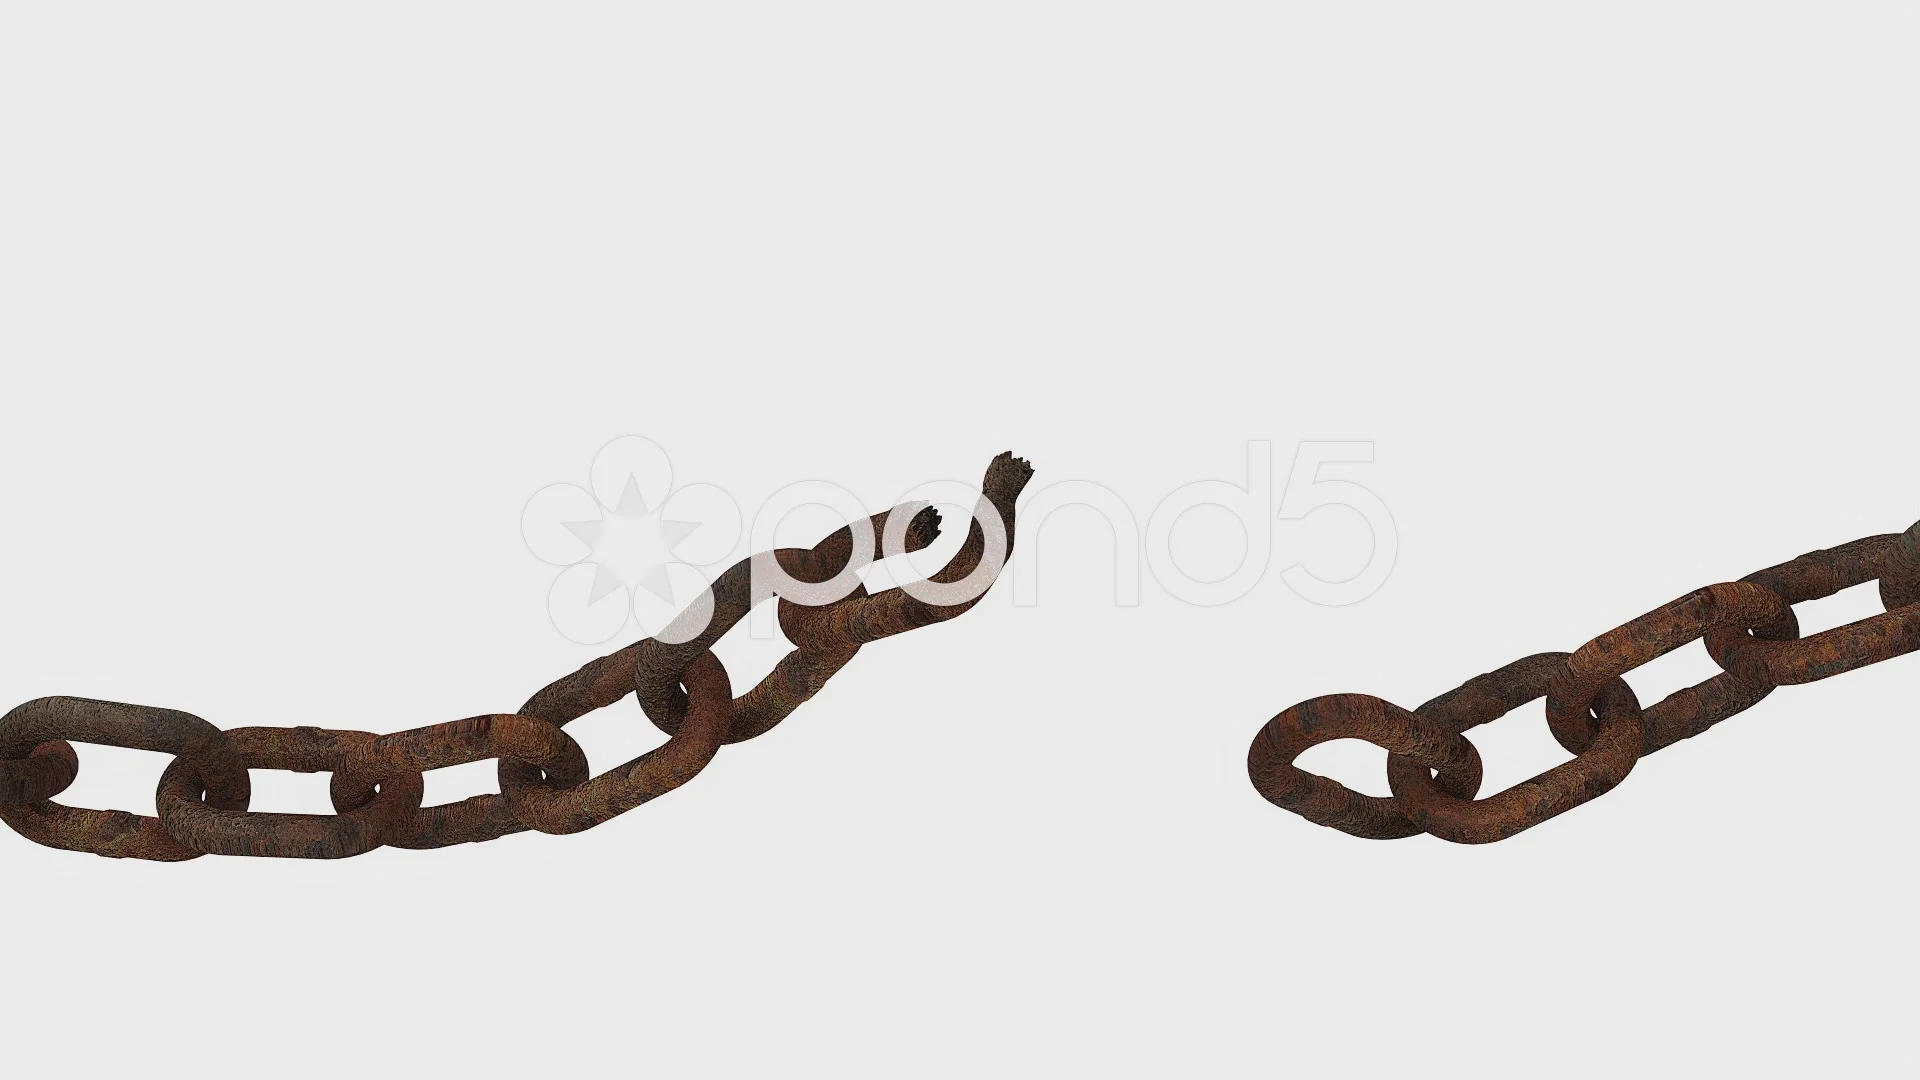 Rusty Black Heavy Cast Iron Chain. Stock Video - Video of chain, close:  93009879